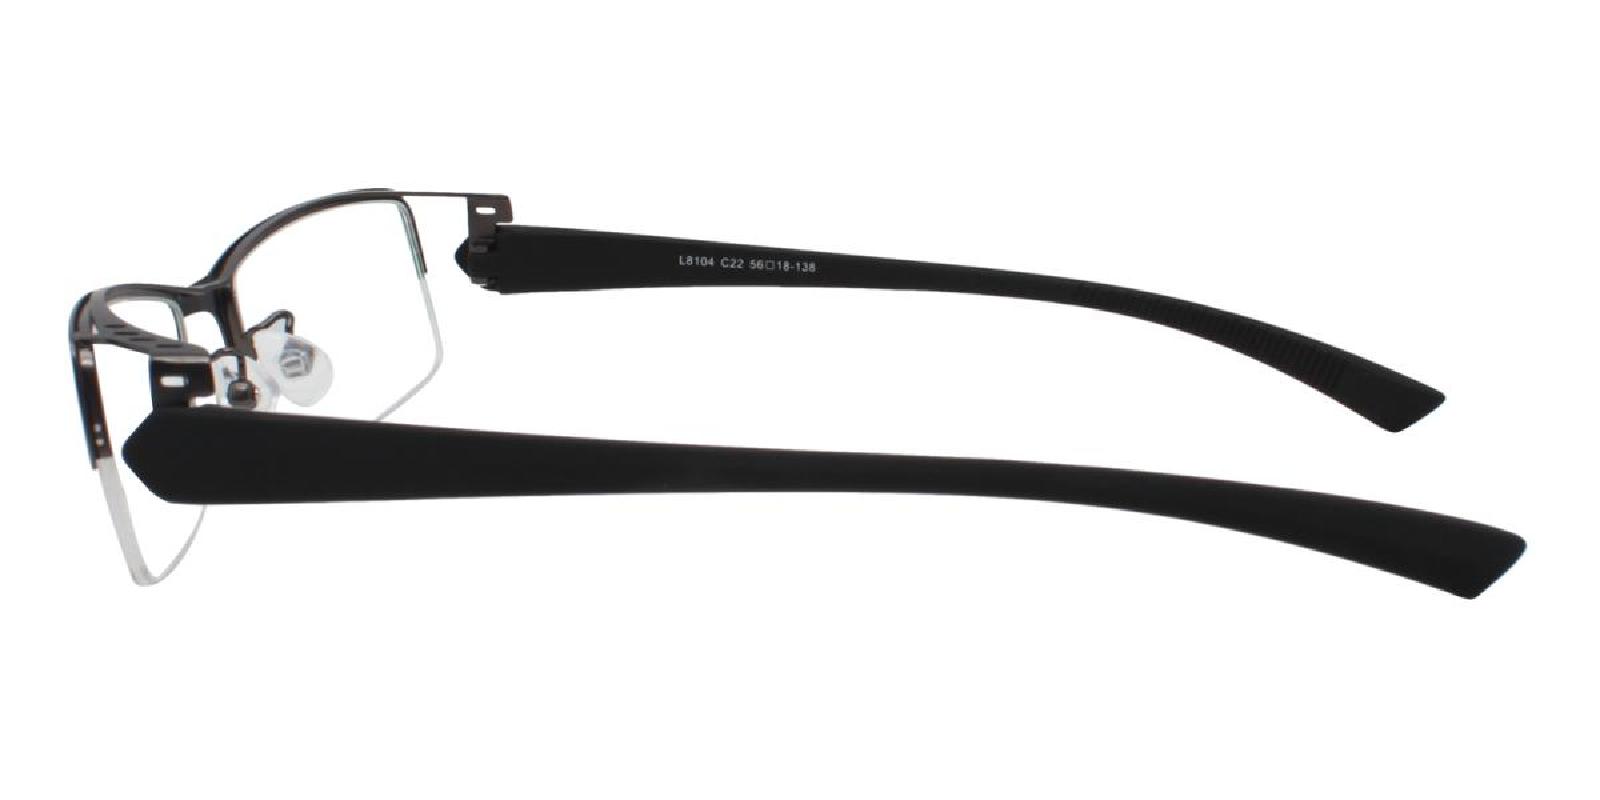 Blean-Black-Rectangle-Metal-Eyeglasses-detail